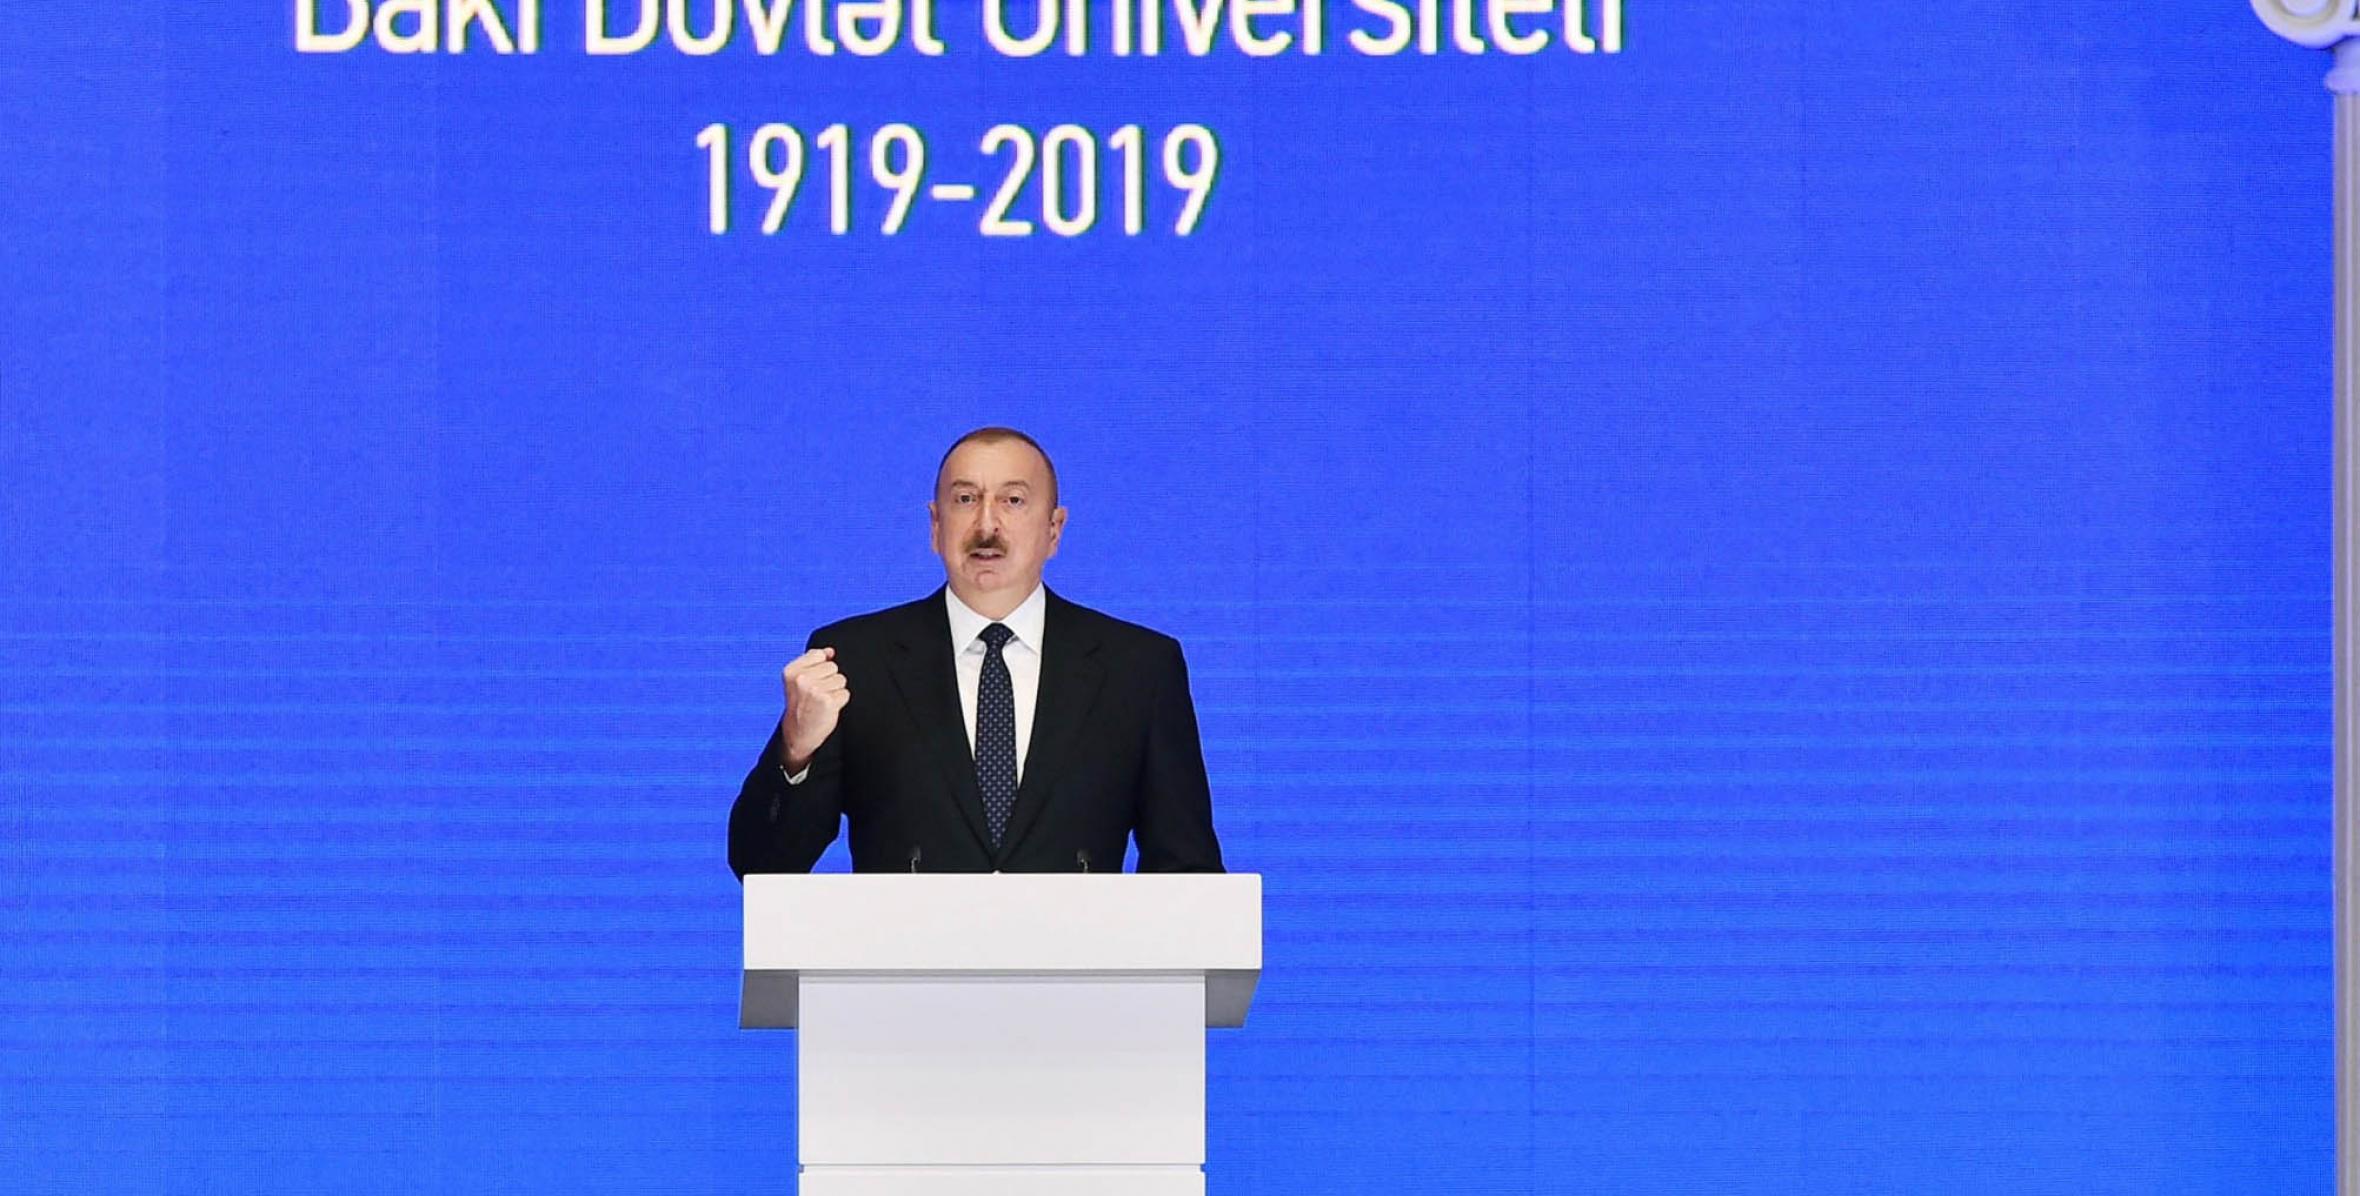 Speech by Ilham Aliyev at the ceremony to mark 100th anniversary of Baku State University